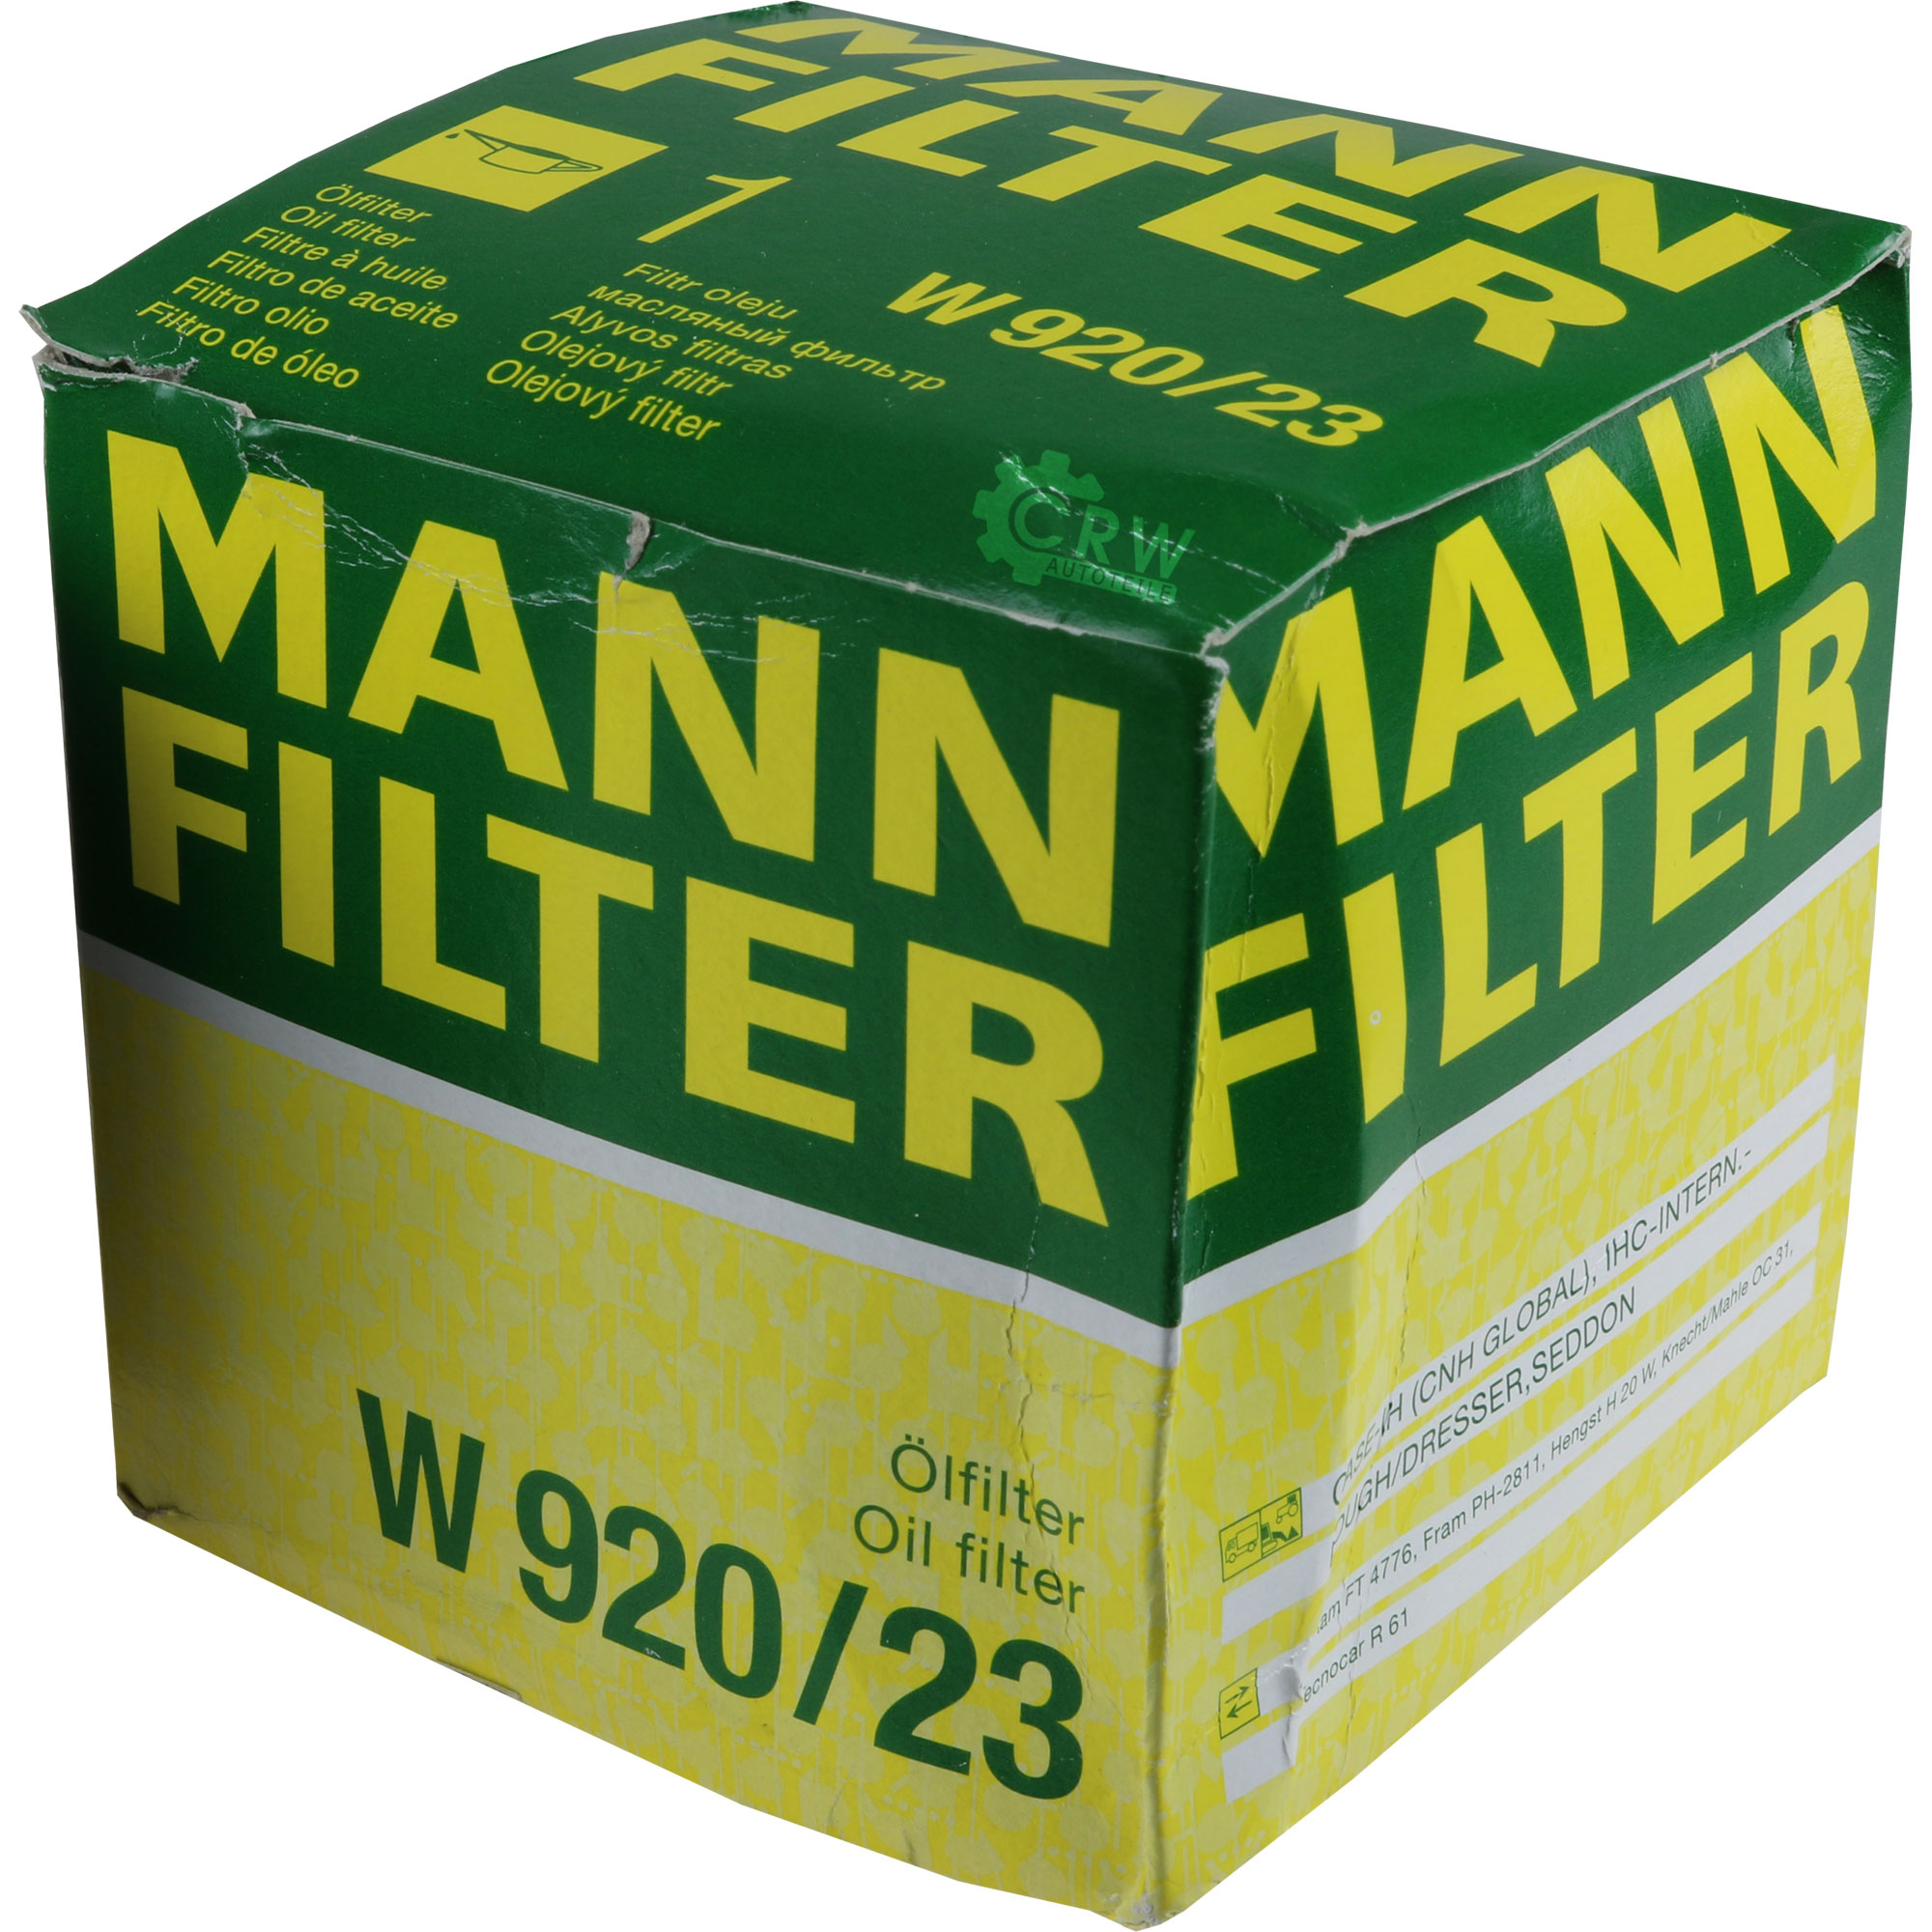 MANN-FILTER Ölfilter Oelfilter W 920/23 Oil Filter